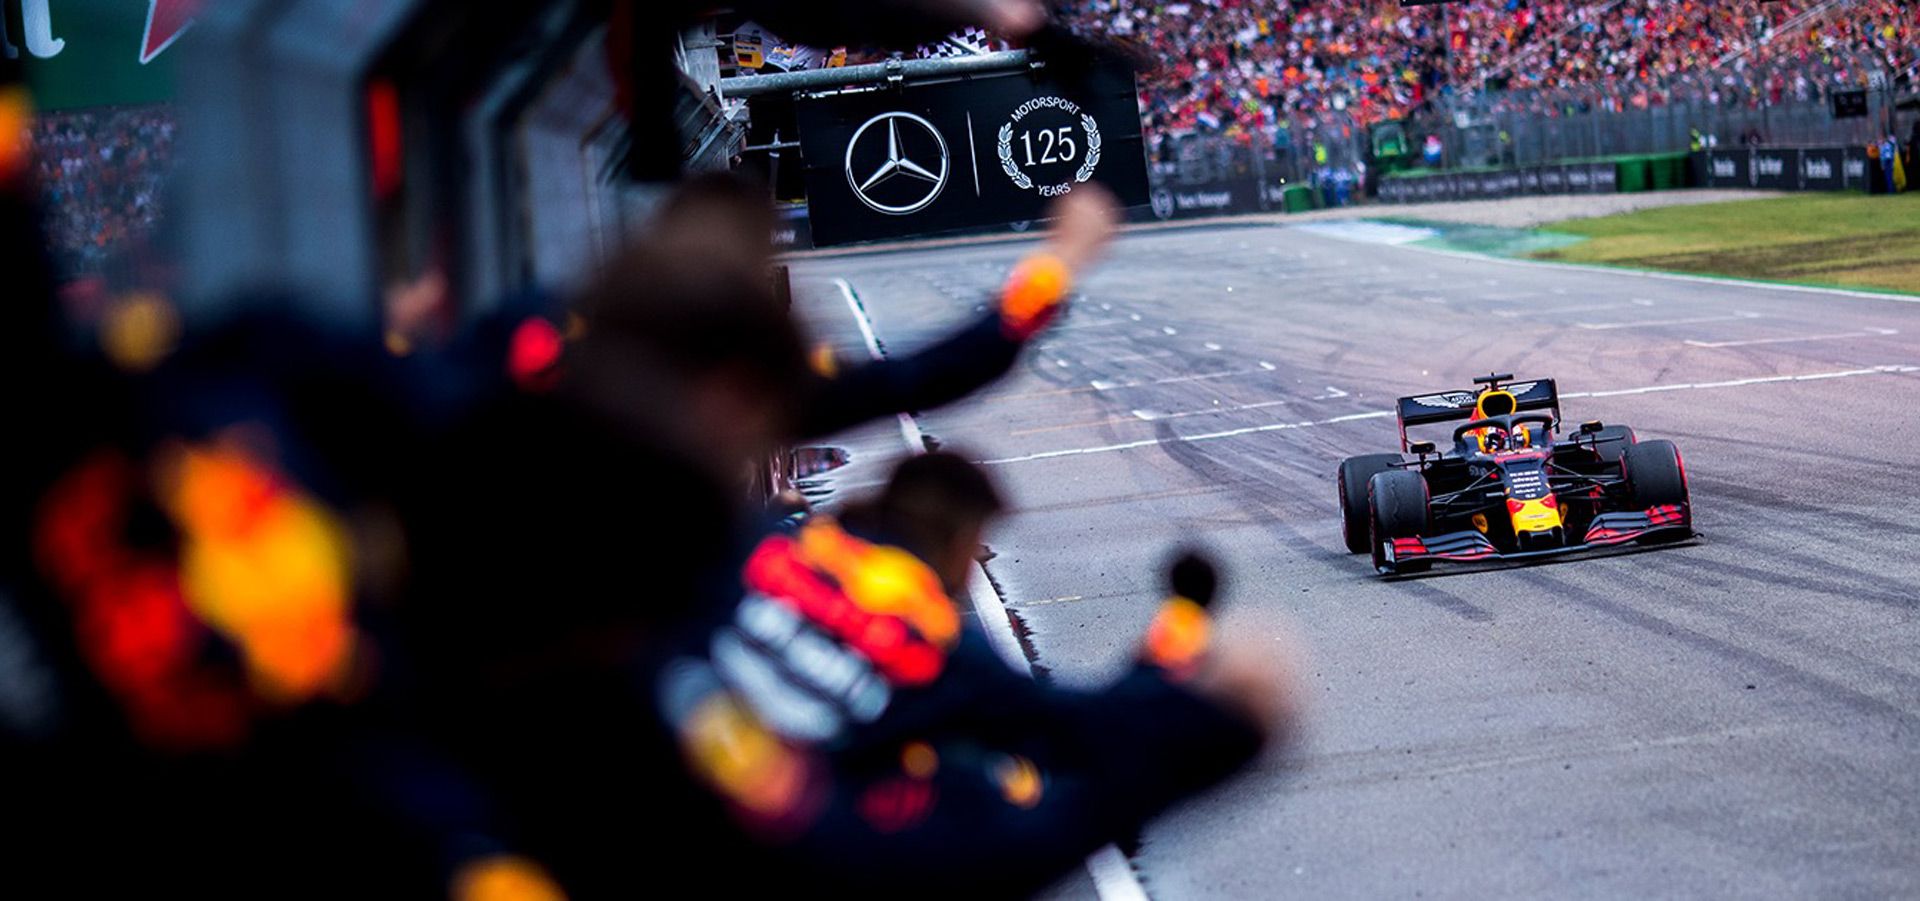 Red Bull's Max Verstappen wins dramatic 2019 Formula One German Grand Prix